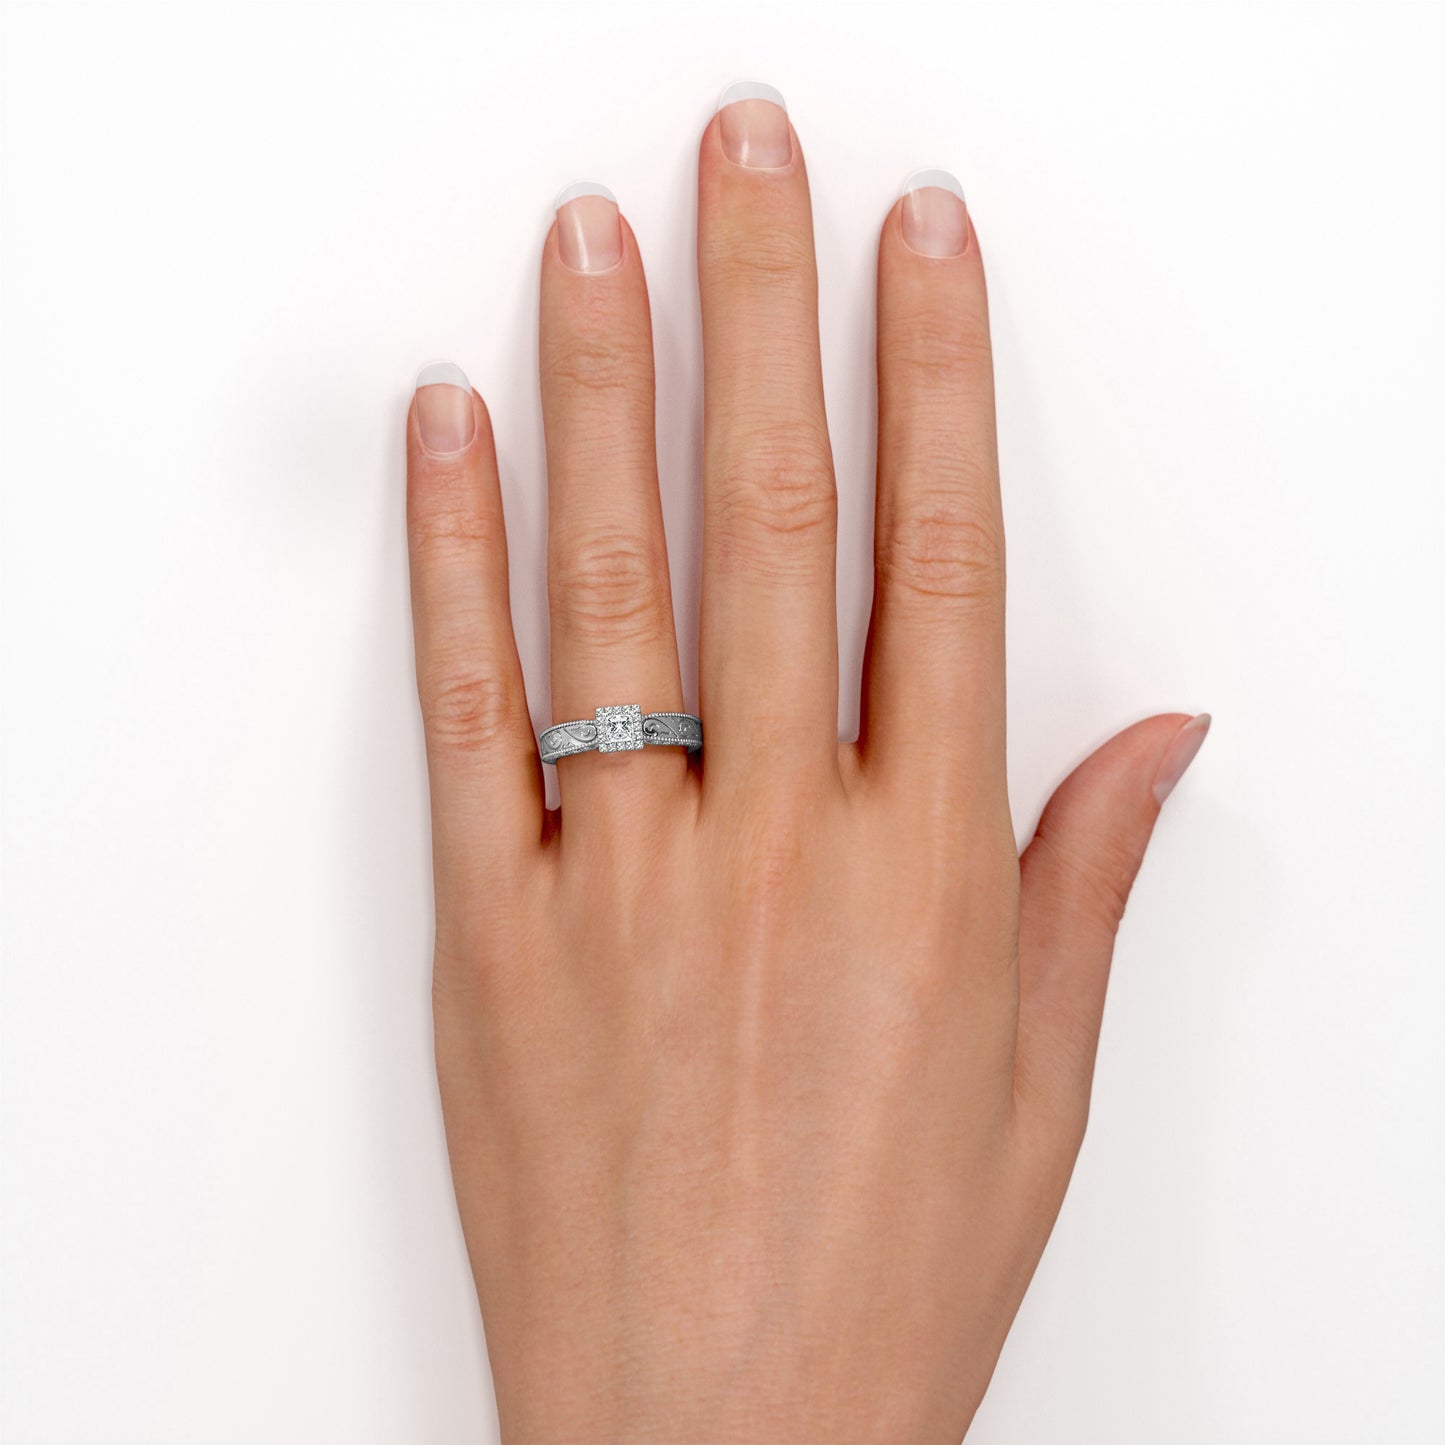 Unique halo 0.4 carat Beveled Edge Princess cut diamond filigree solitaire engagement ring in White gold